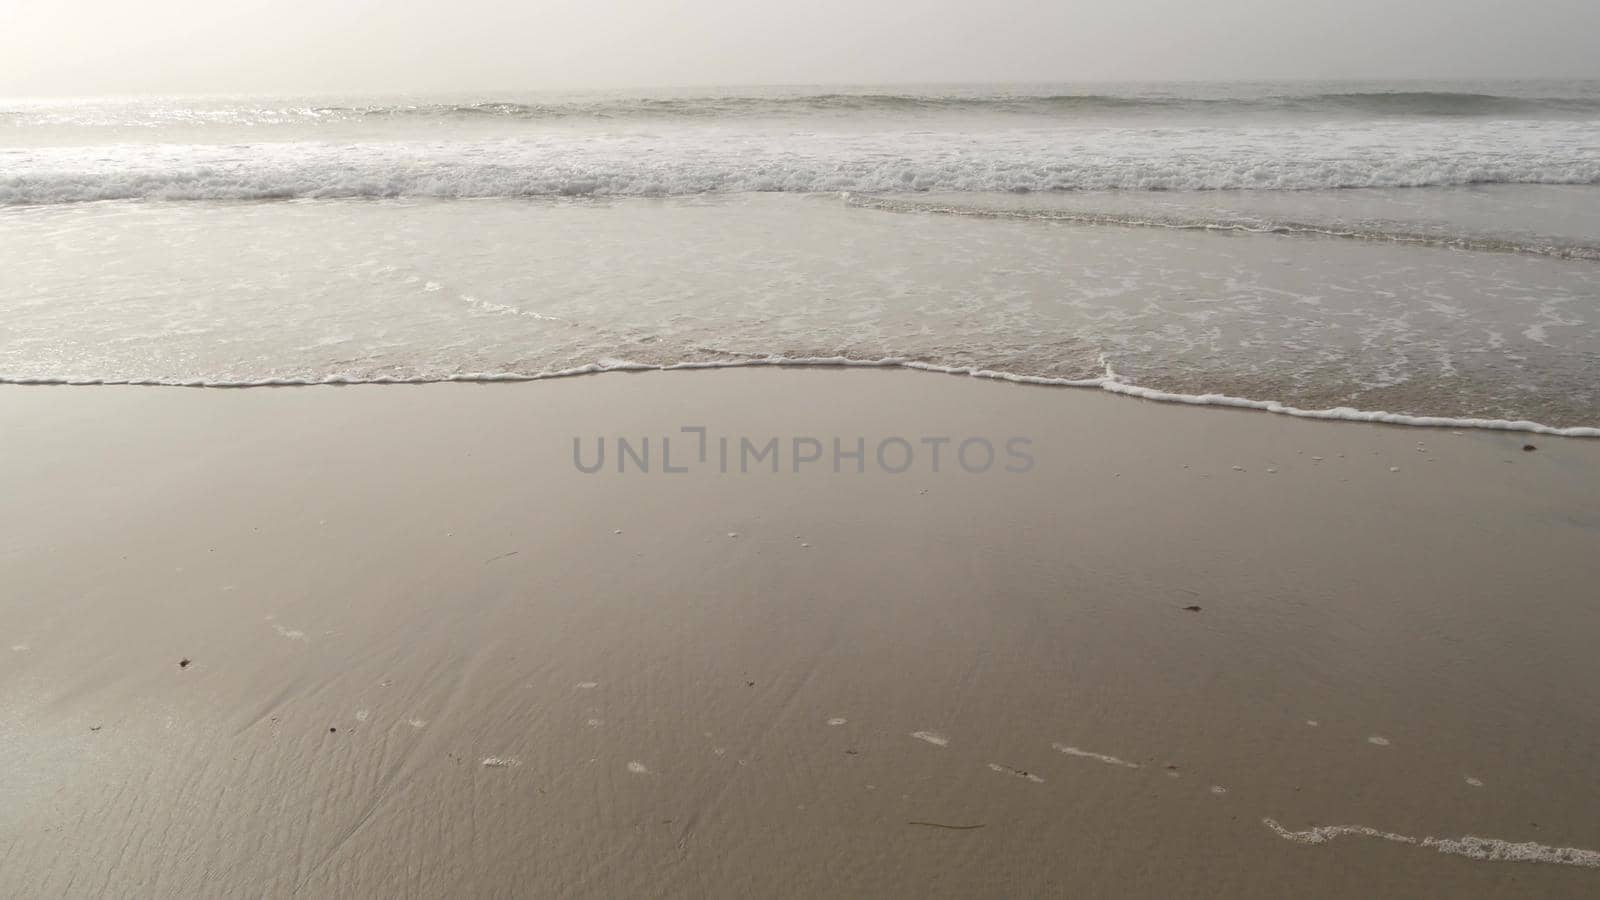 Sandy misty beach, Encinitas California USA. Pacific ocean coast, dense fog brume, empty sea shore. Coastline near Los Angeles, milky smog haze. Gloomy weather on shoreline. Grey monochrome water wave